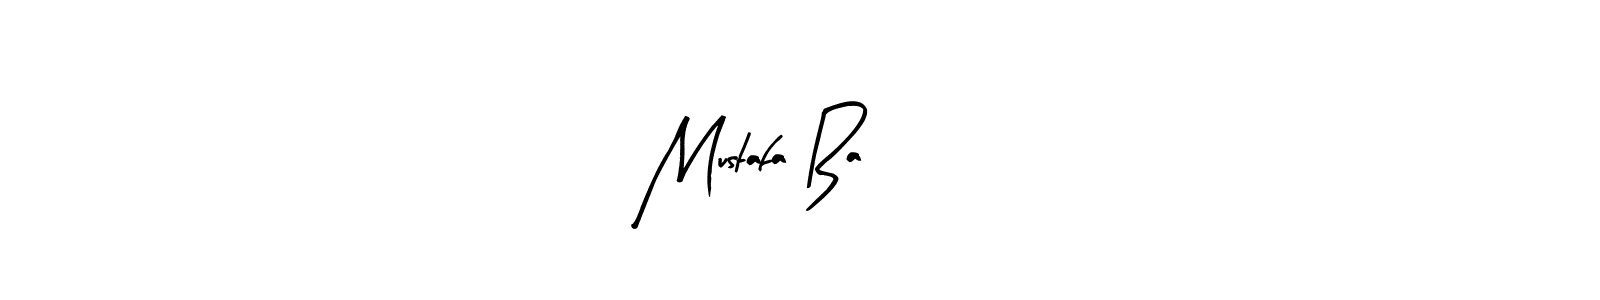 How to make Mustafa Bağış signature? Arty Signature is a professional autograph style. Create handwritten signature for Mustafa Bağış name. Mustafa Bağış signature style 8 images and pictures png